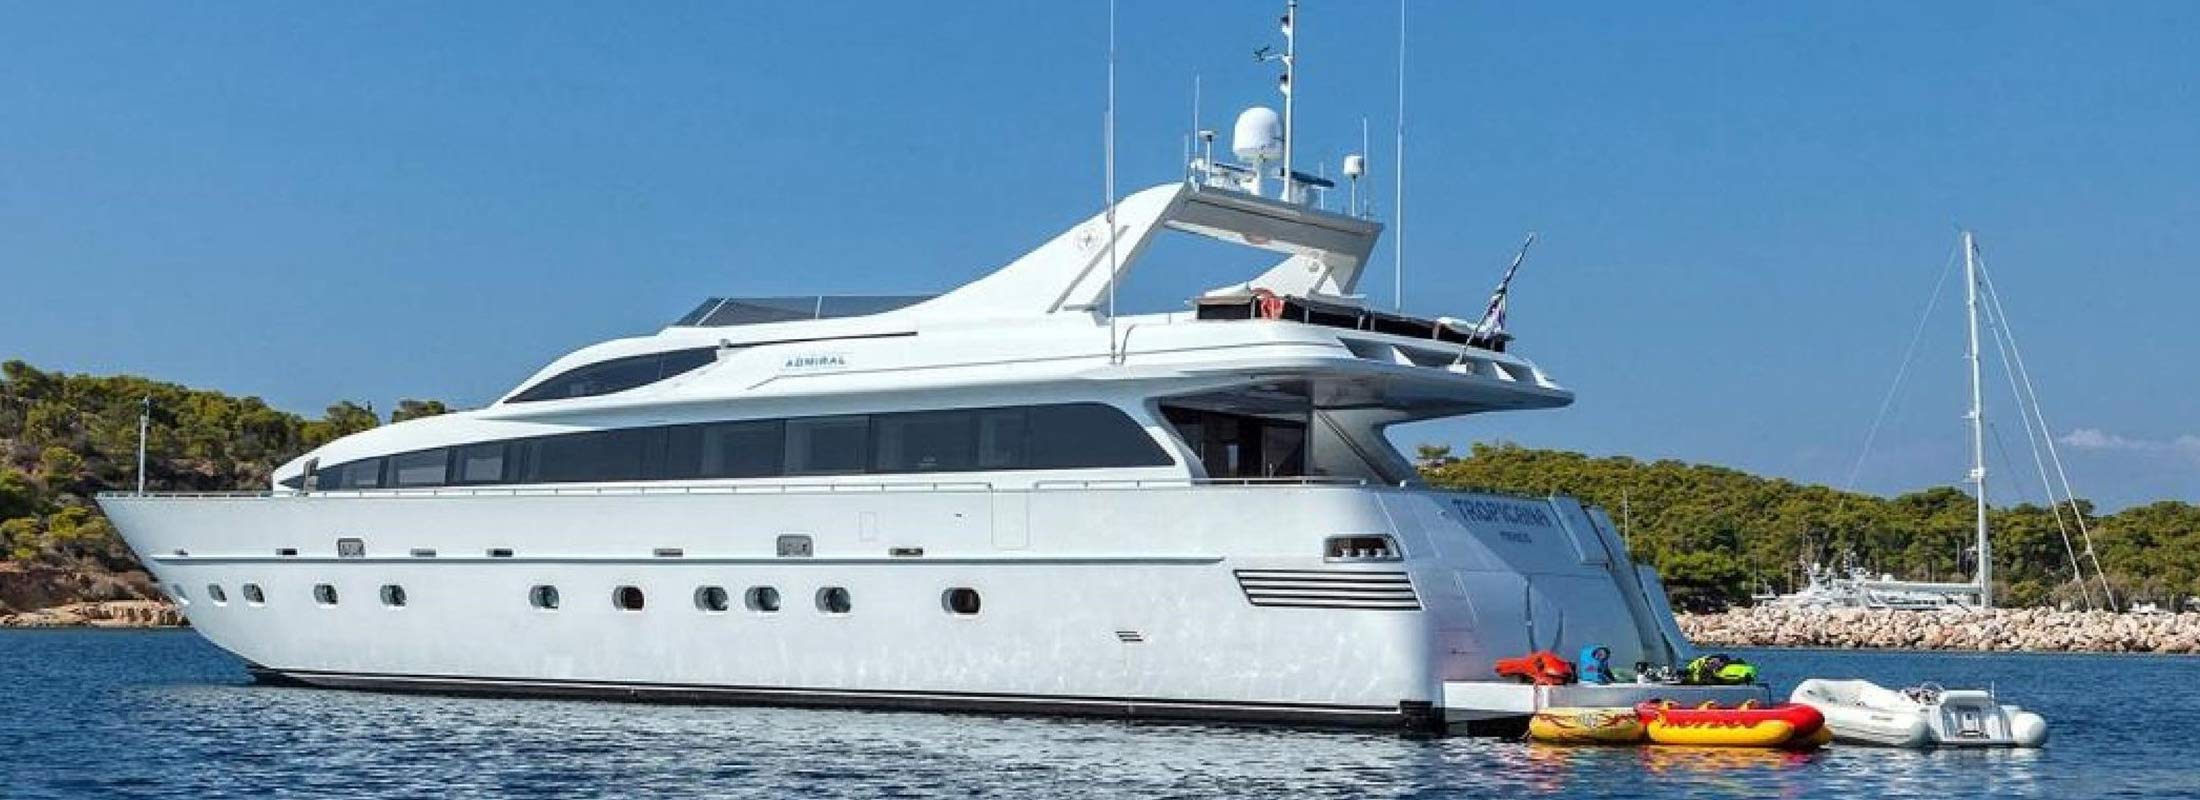 Tropicana Motor Yacht for Charter Mediterranean slider 2